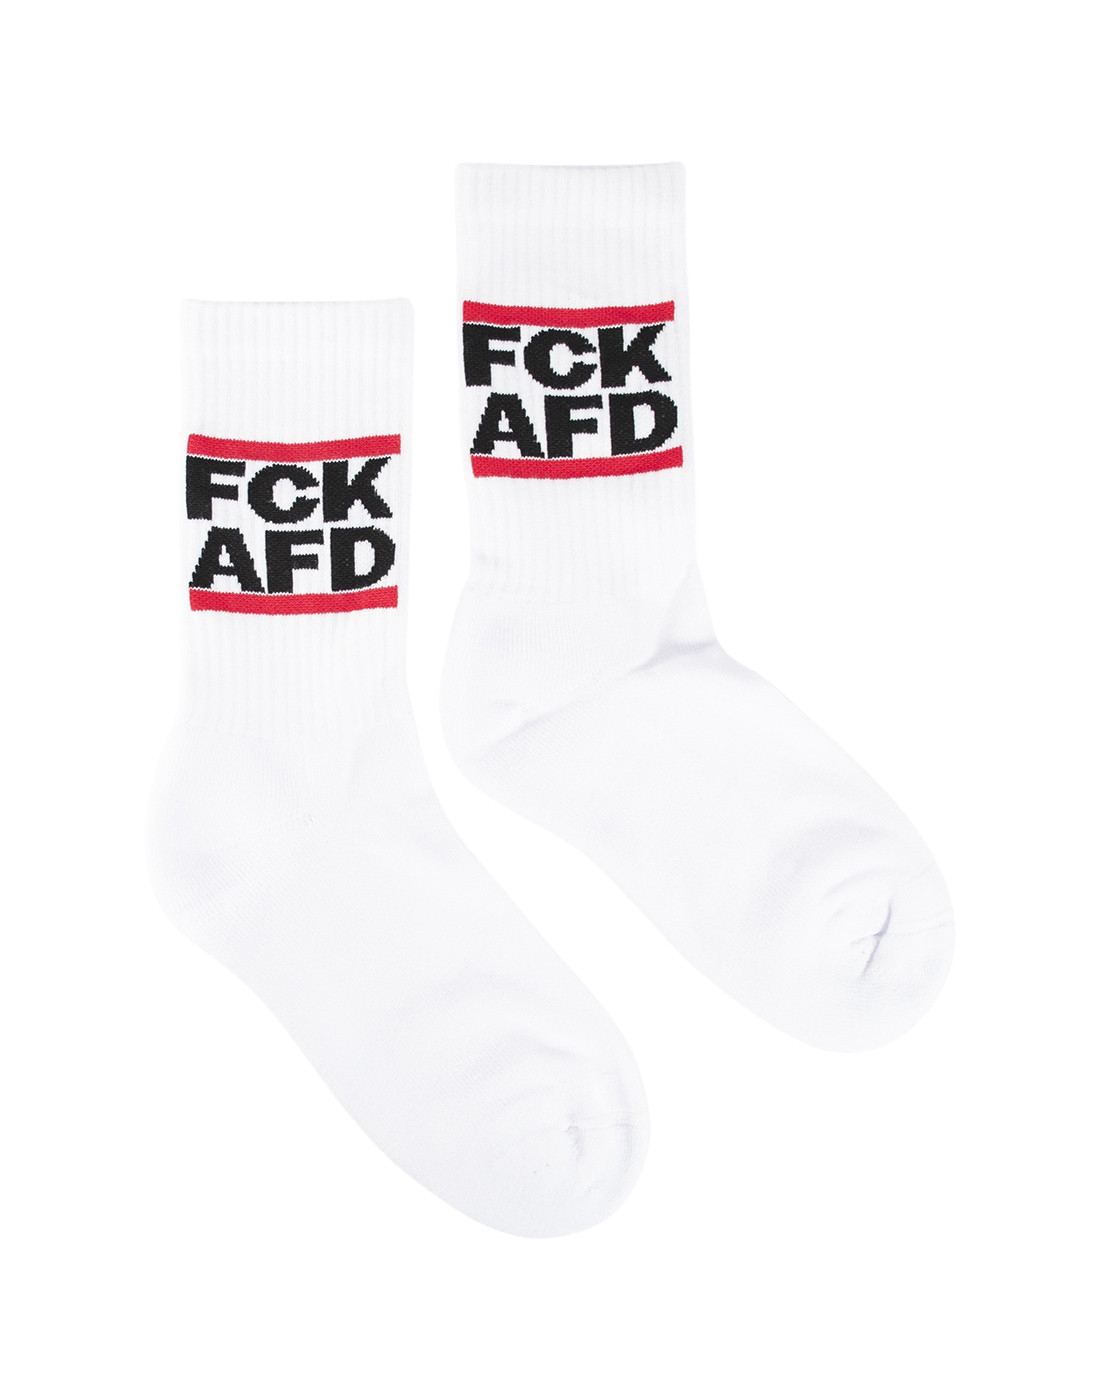 Fahne - FCK AFD